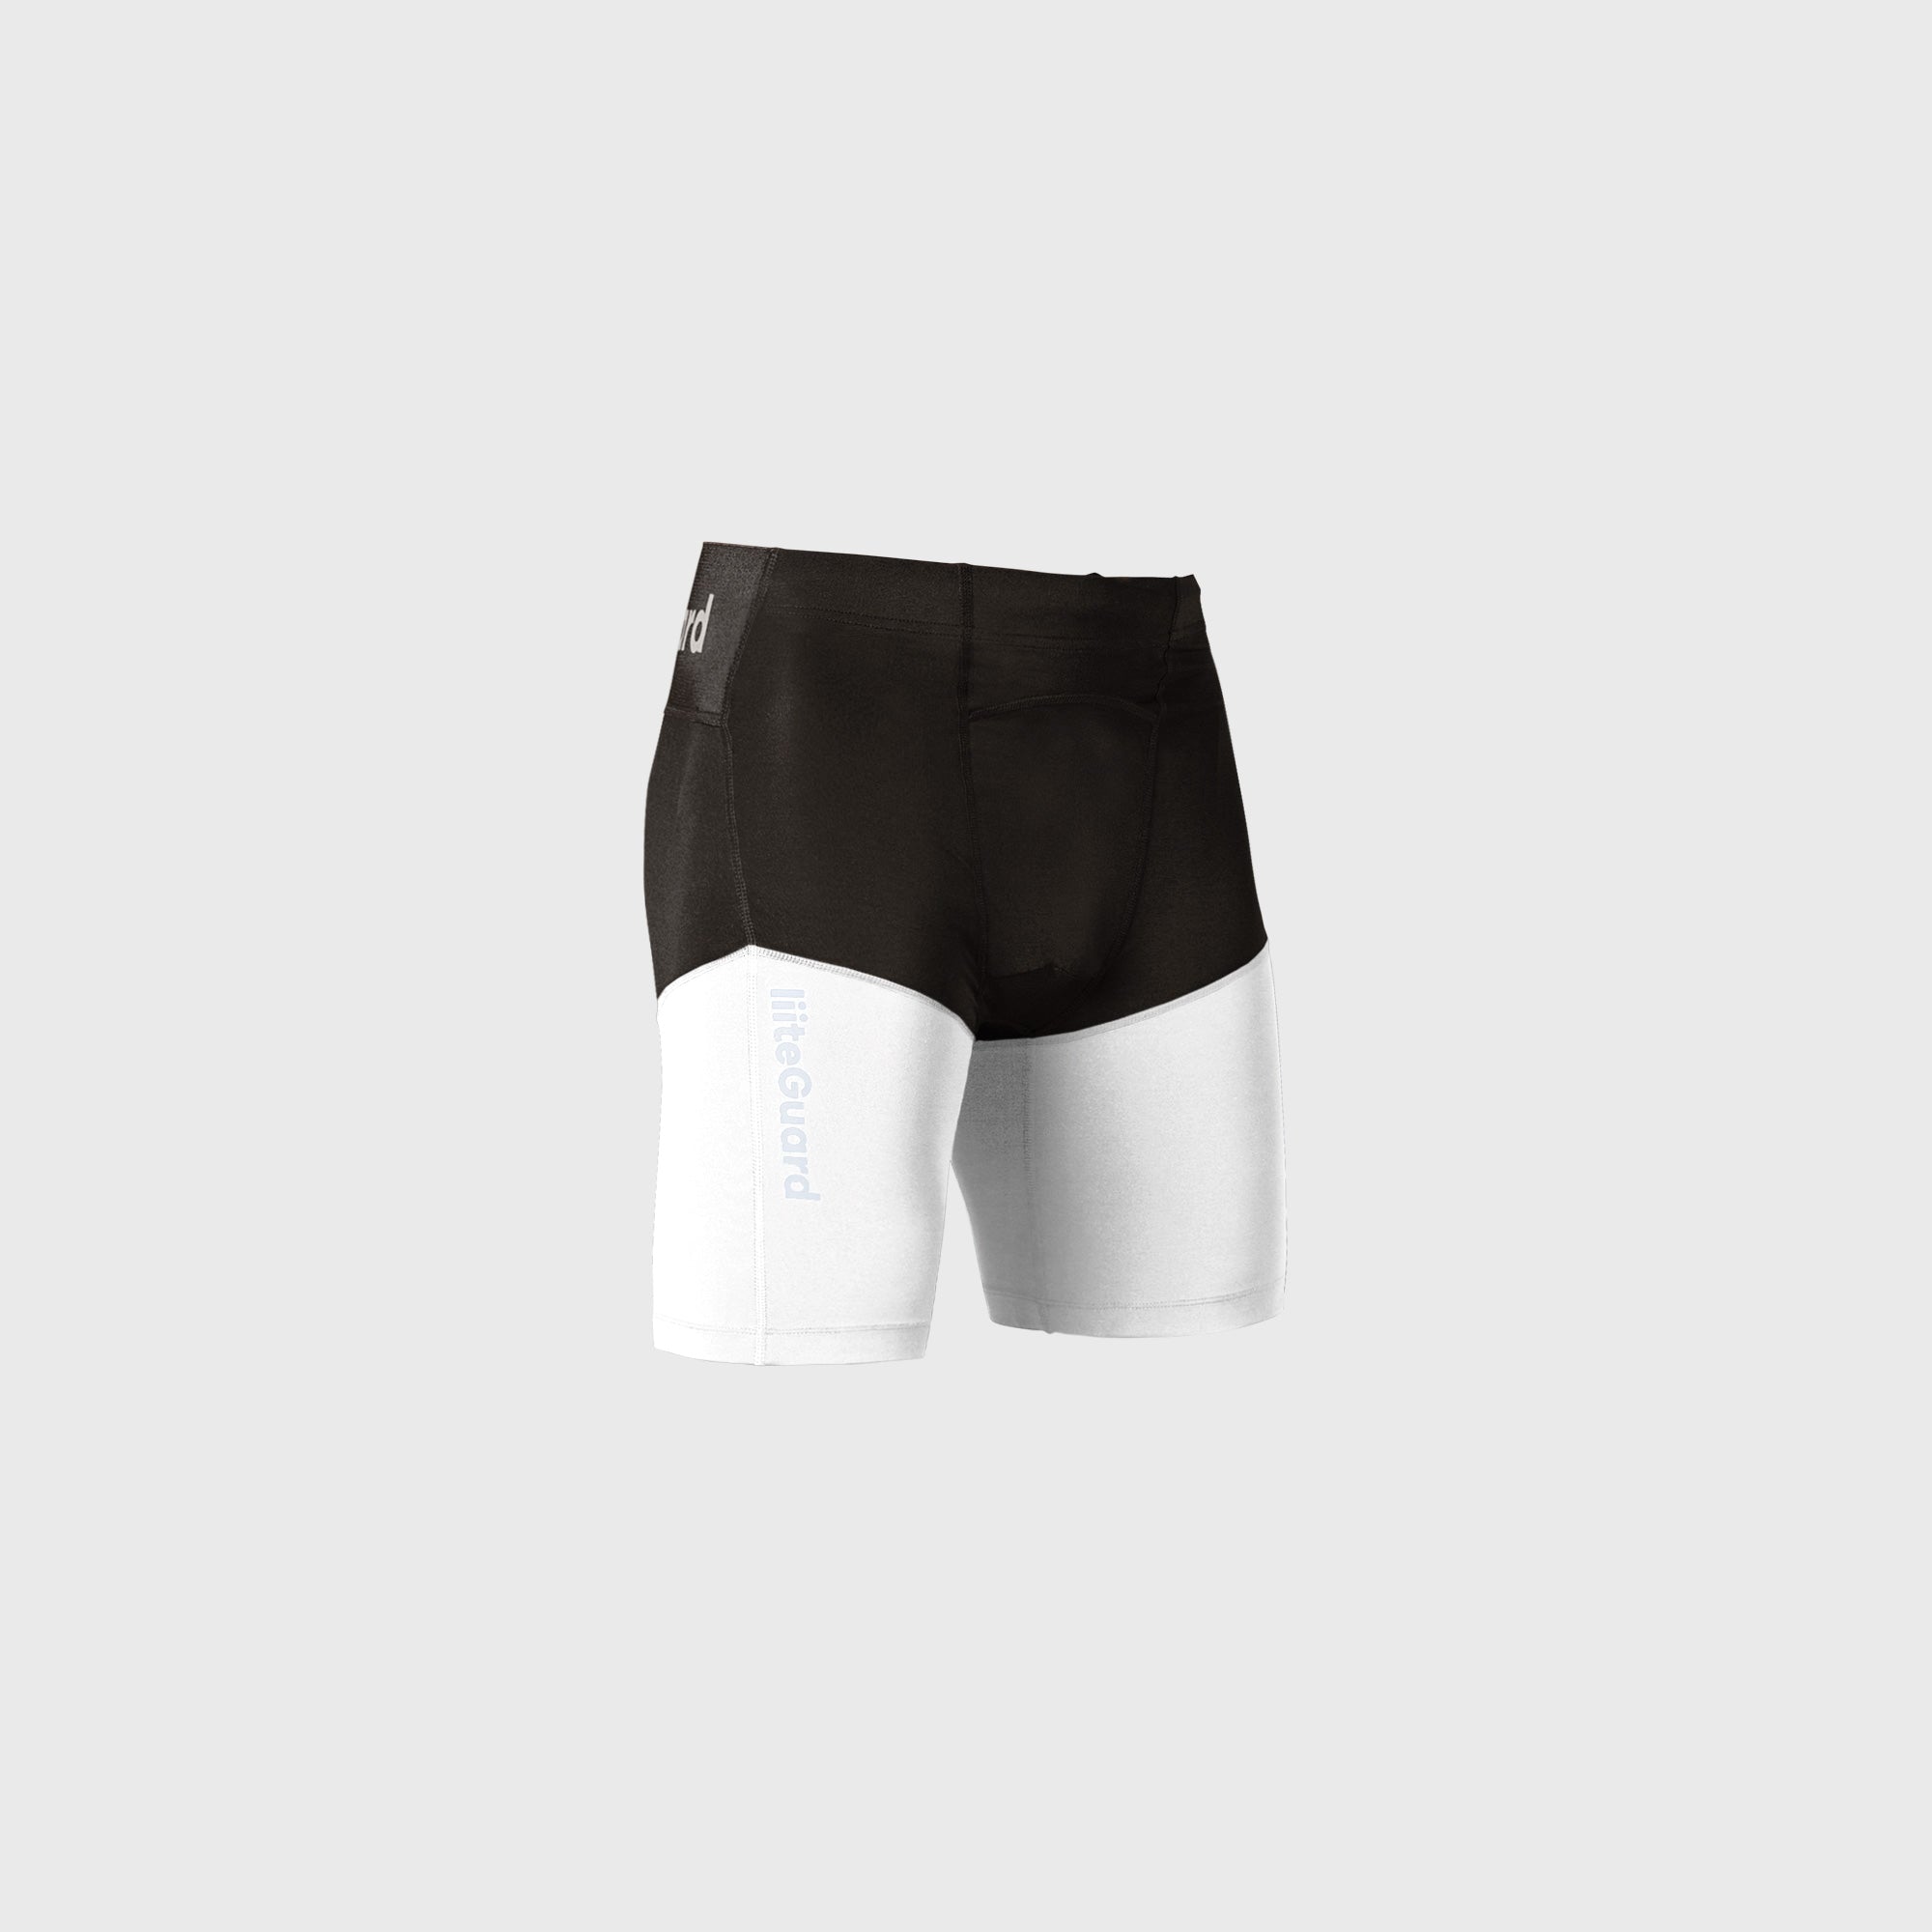 IAMELITE® Men's Tights and Run Shorts Combination